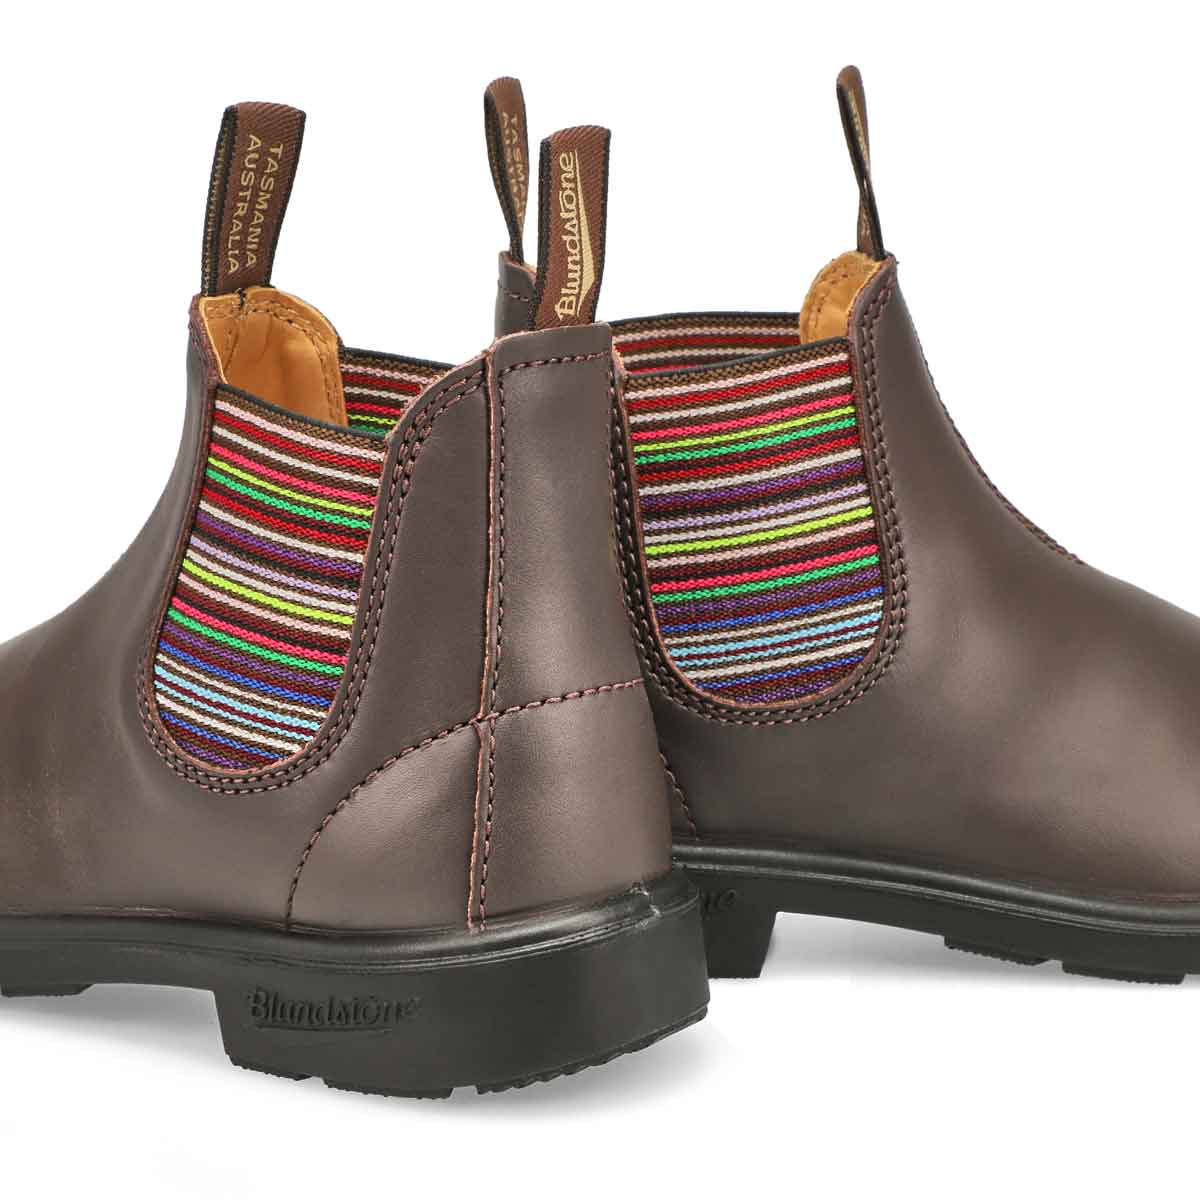 Unisex 1413 - Kids Boot - Brown Striped Elastic